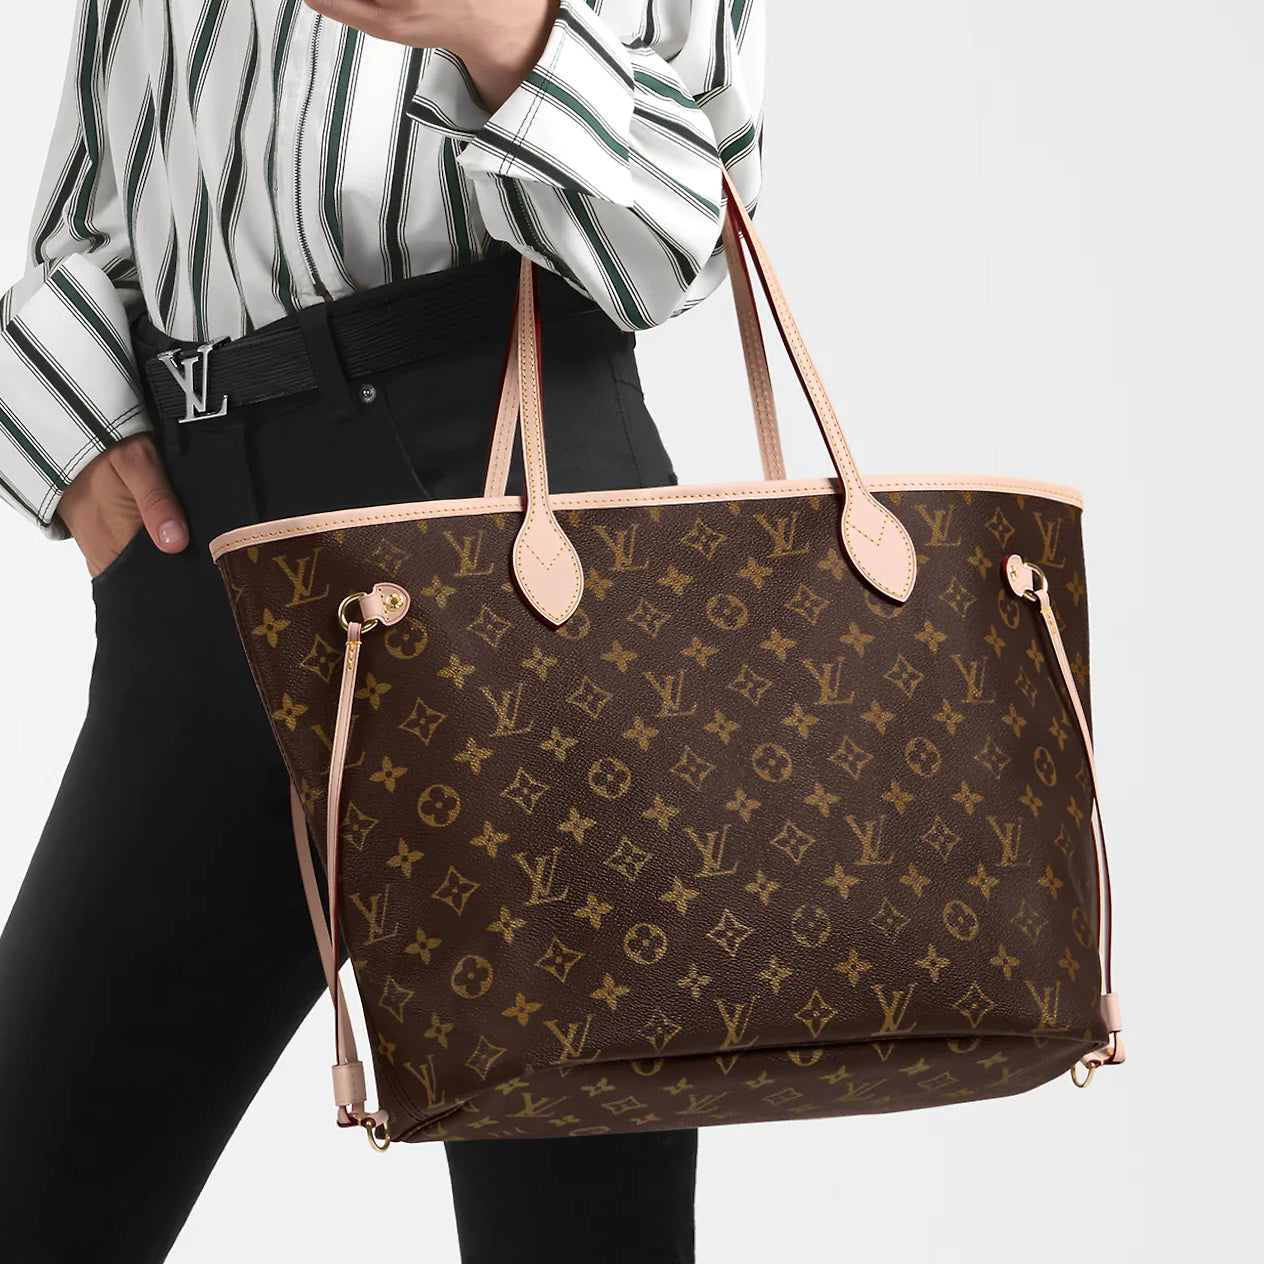 LV Louis Vuitton Neverfull Monogram Canvas Handbag Shoulder Bag 